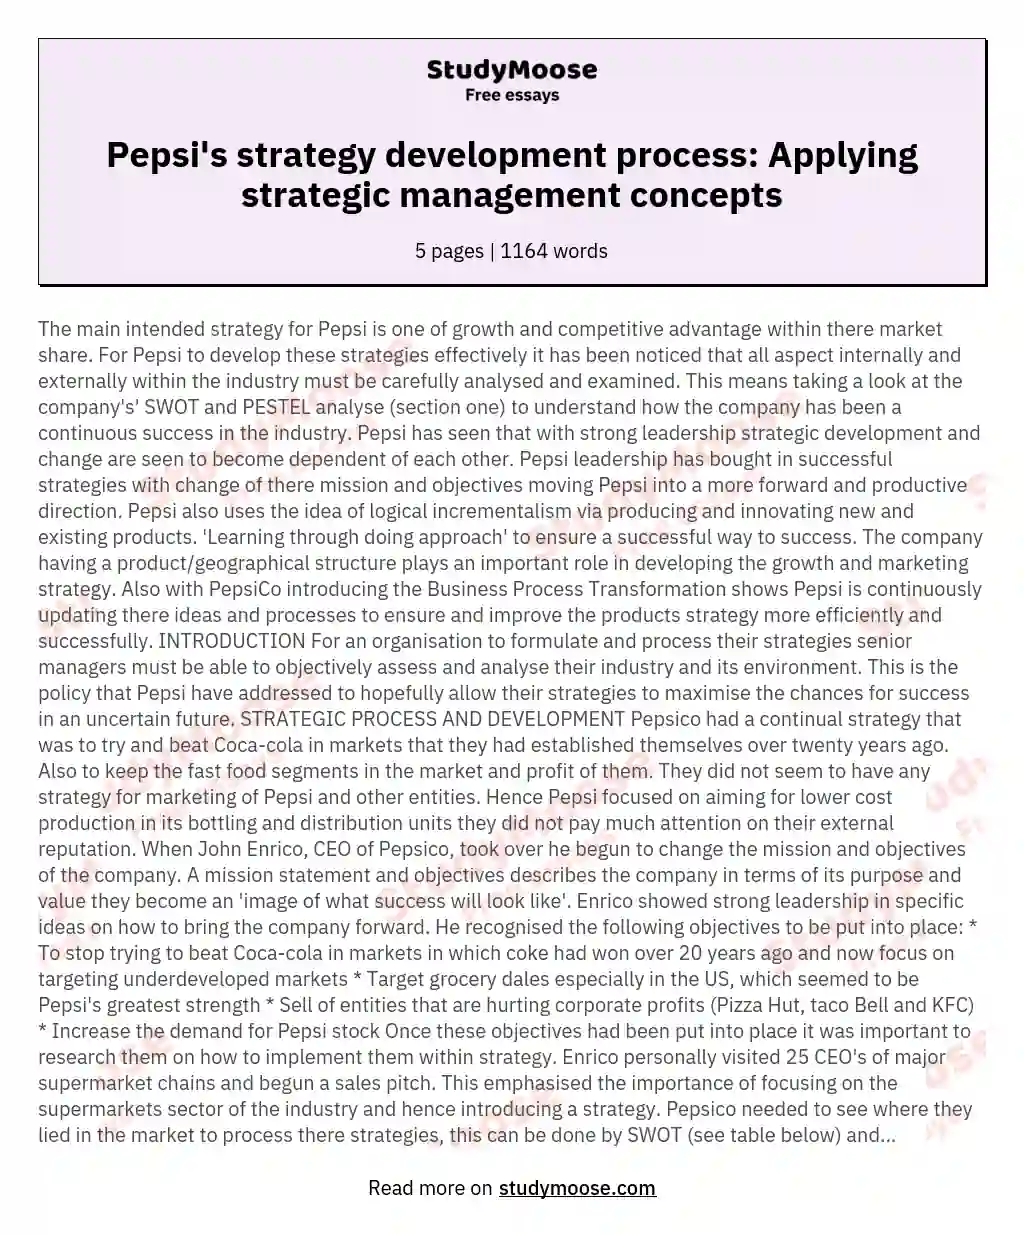 Pepsi's strategy development process: Applying strategic management concepts essay